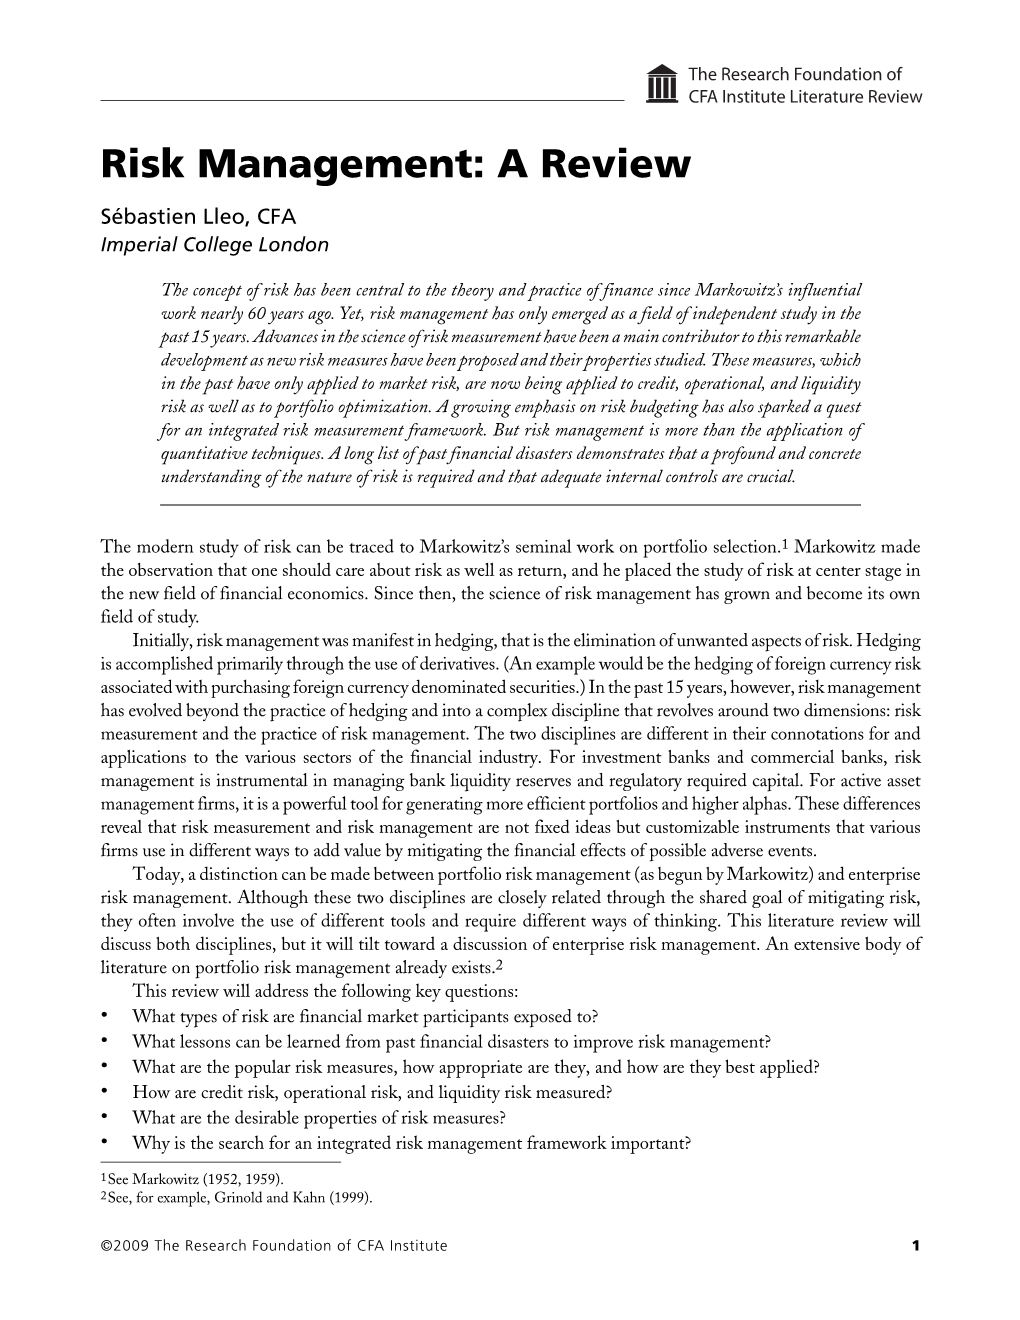 Risk Management: a Review